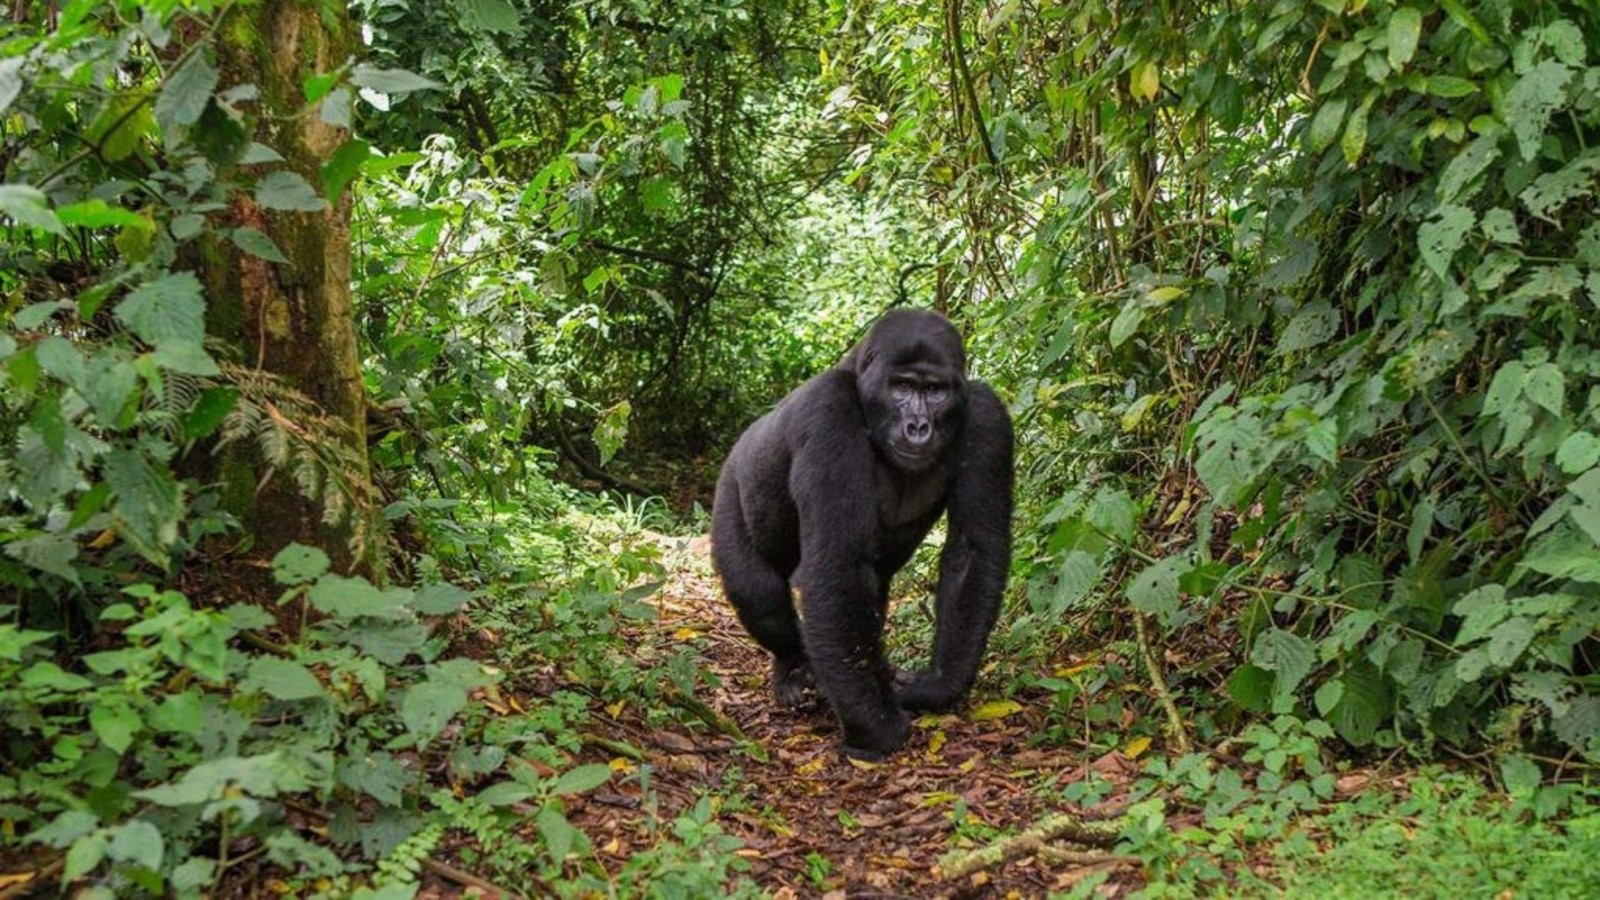 Silverback-gorilla-look-at-the-camera-on-gorilla-trekking-in-uganda-1024x692-2.jpg